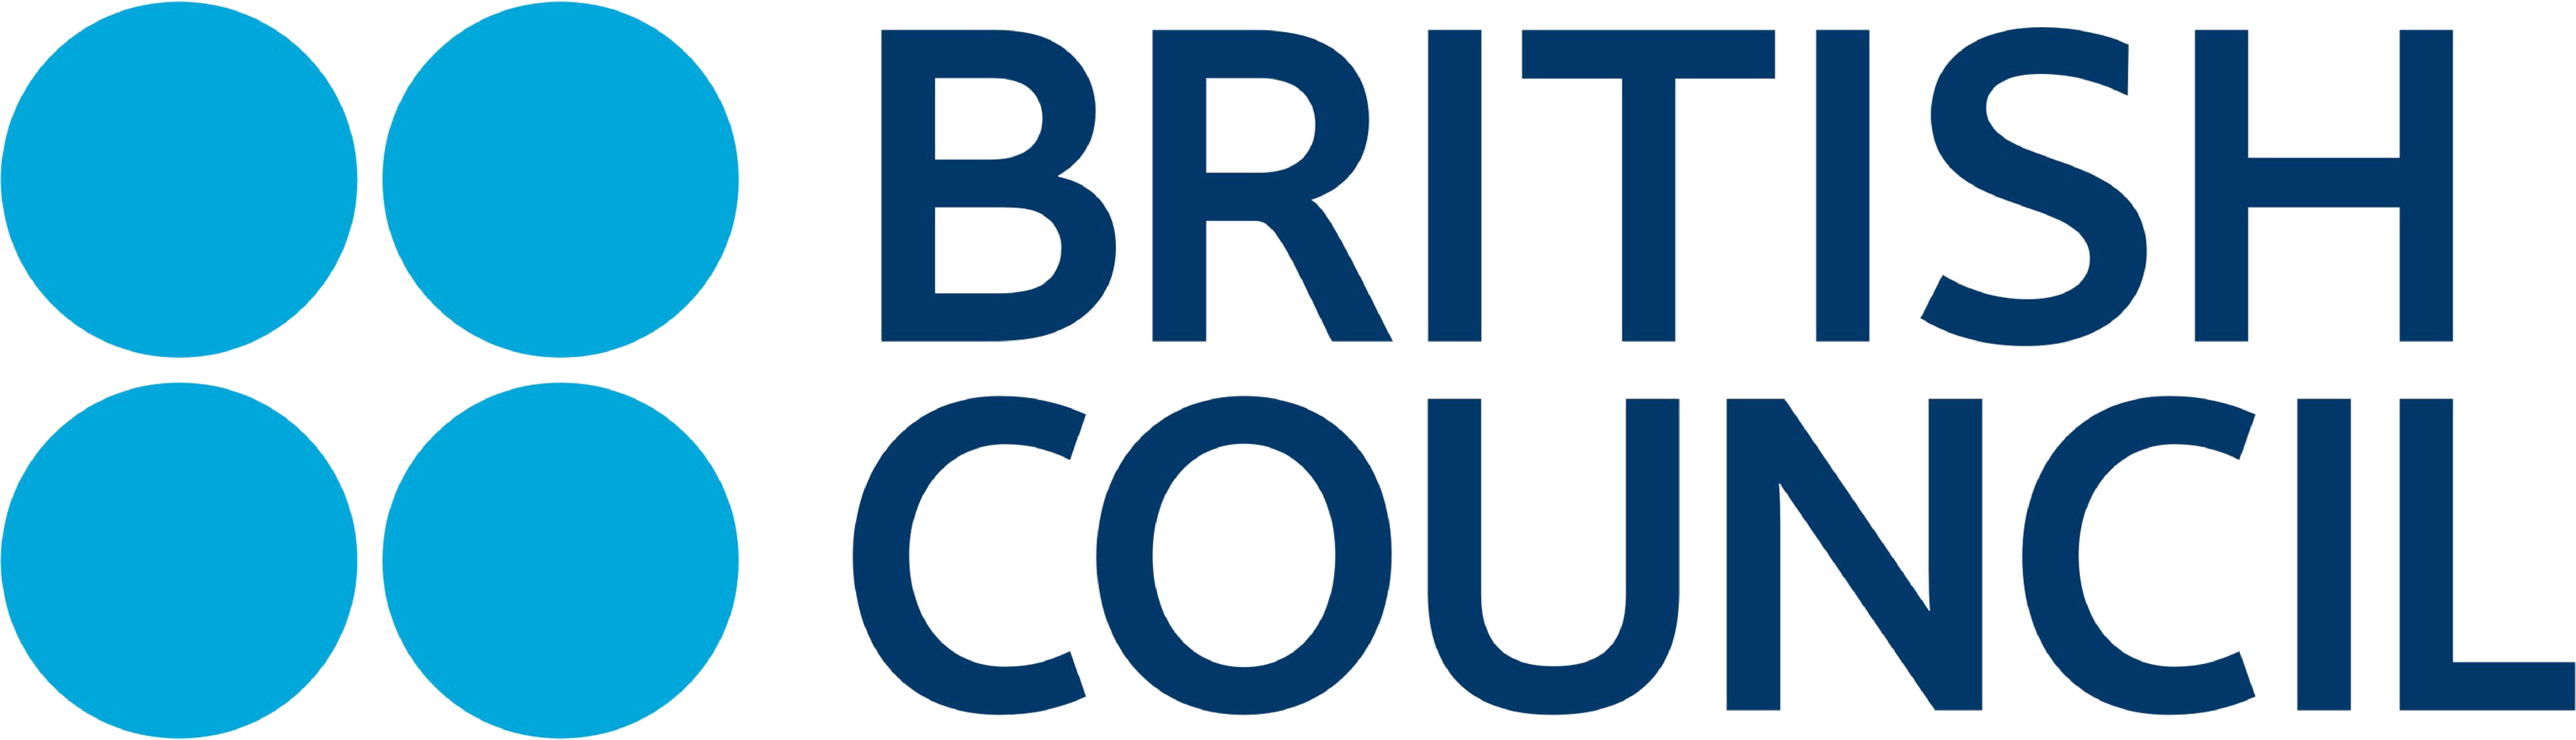 BritishCouncil logo